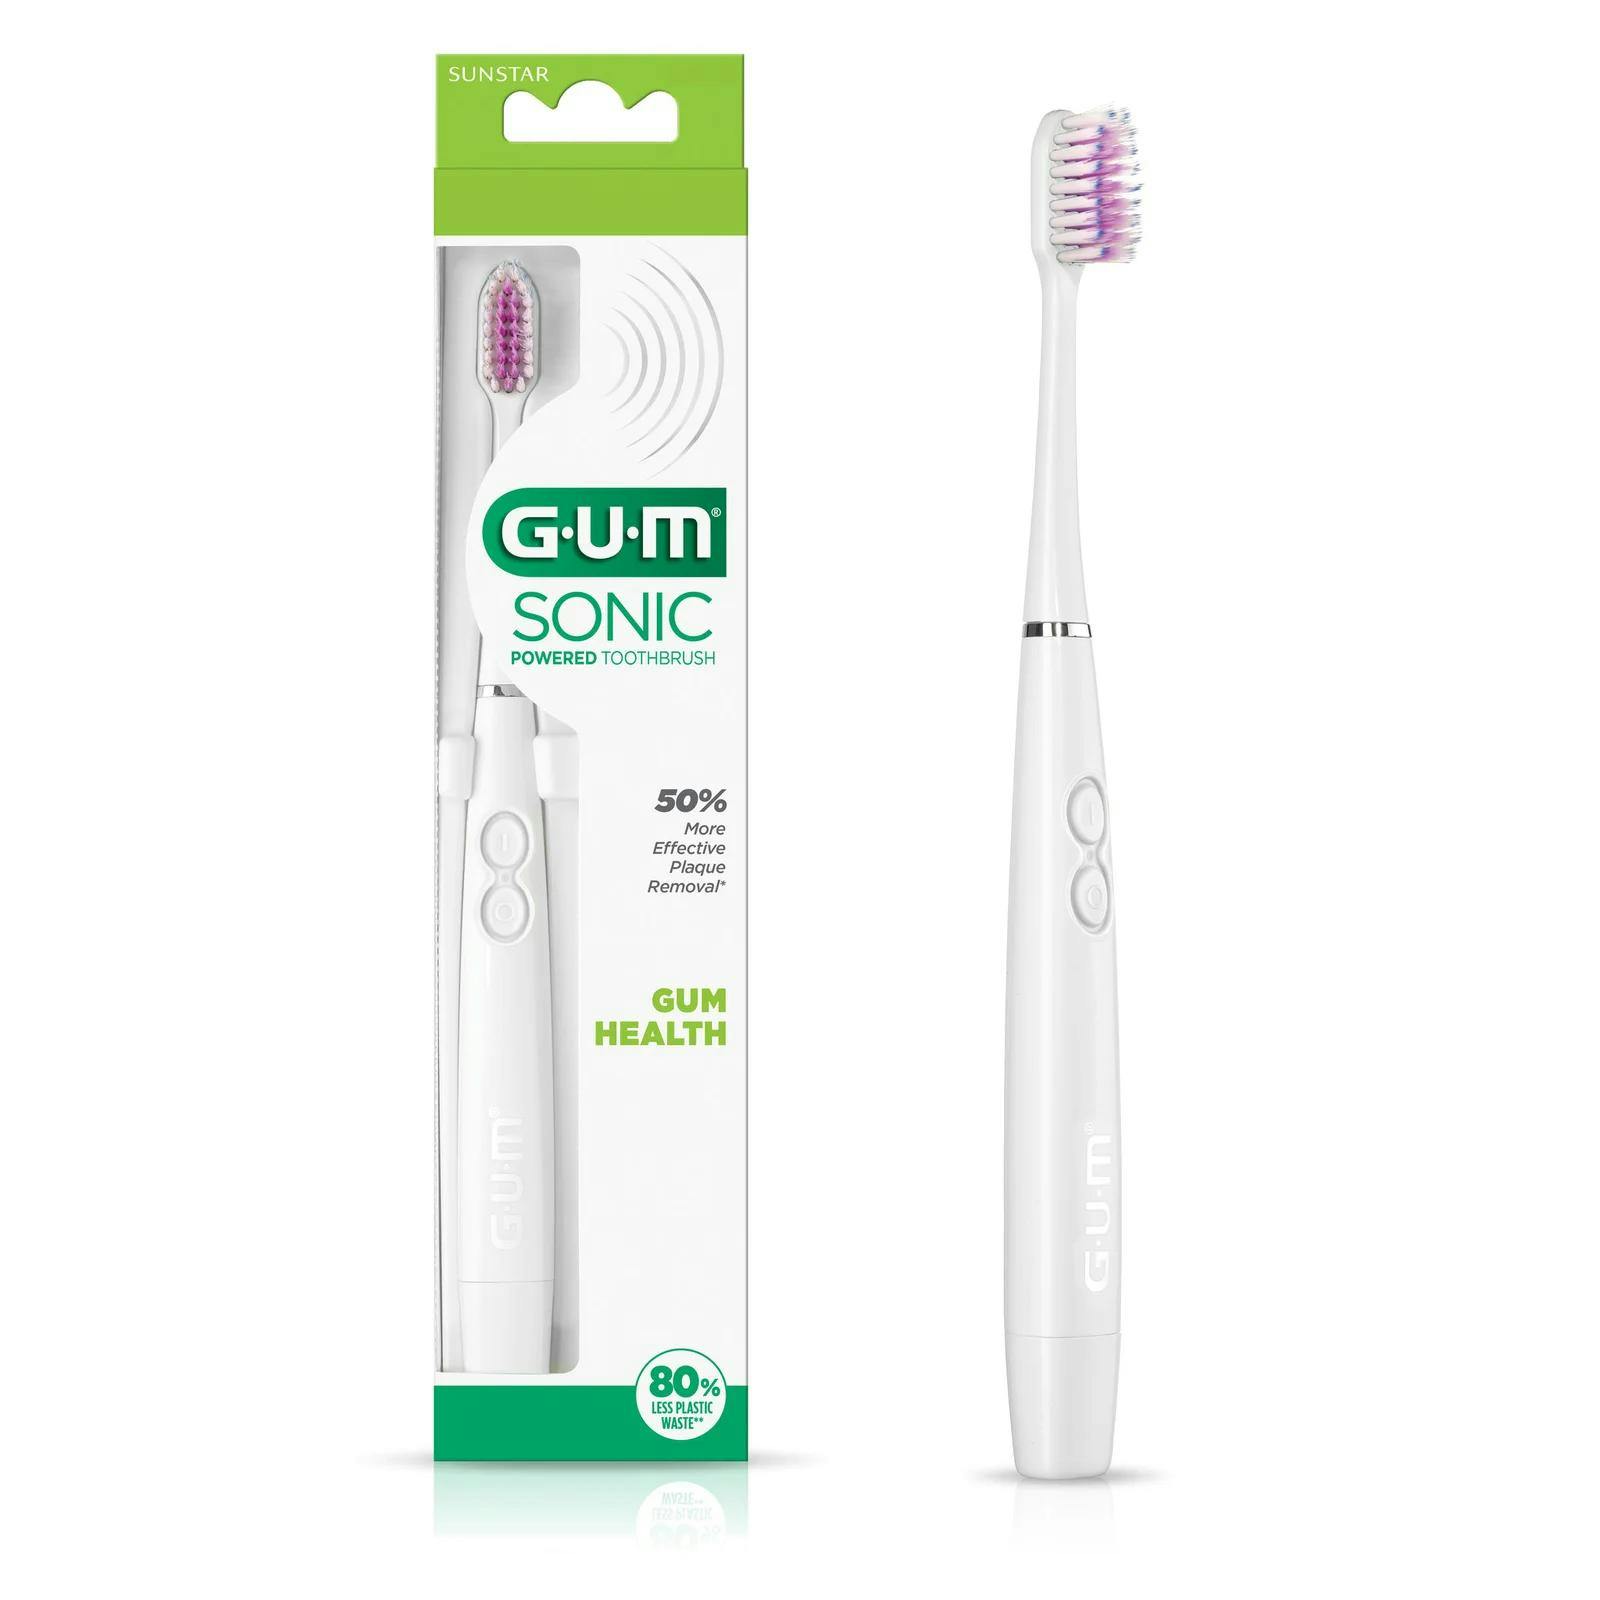 GUM Sonic Power Toothbrush | Image Credit: © Sunstar